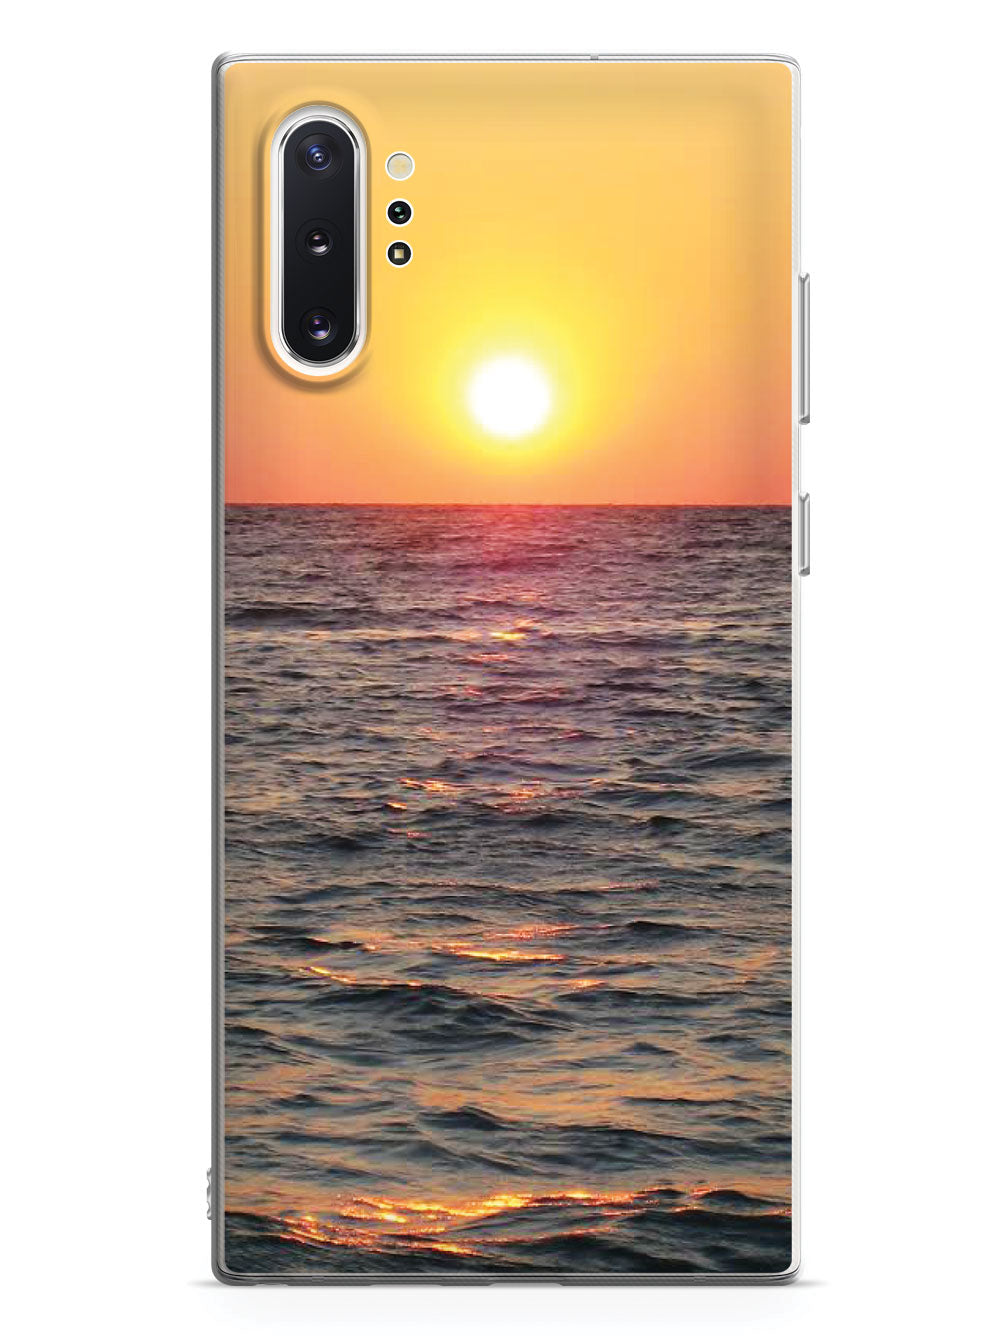 Beautiful Ocean Sunset Case